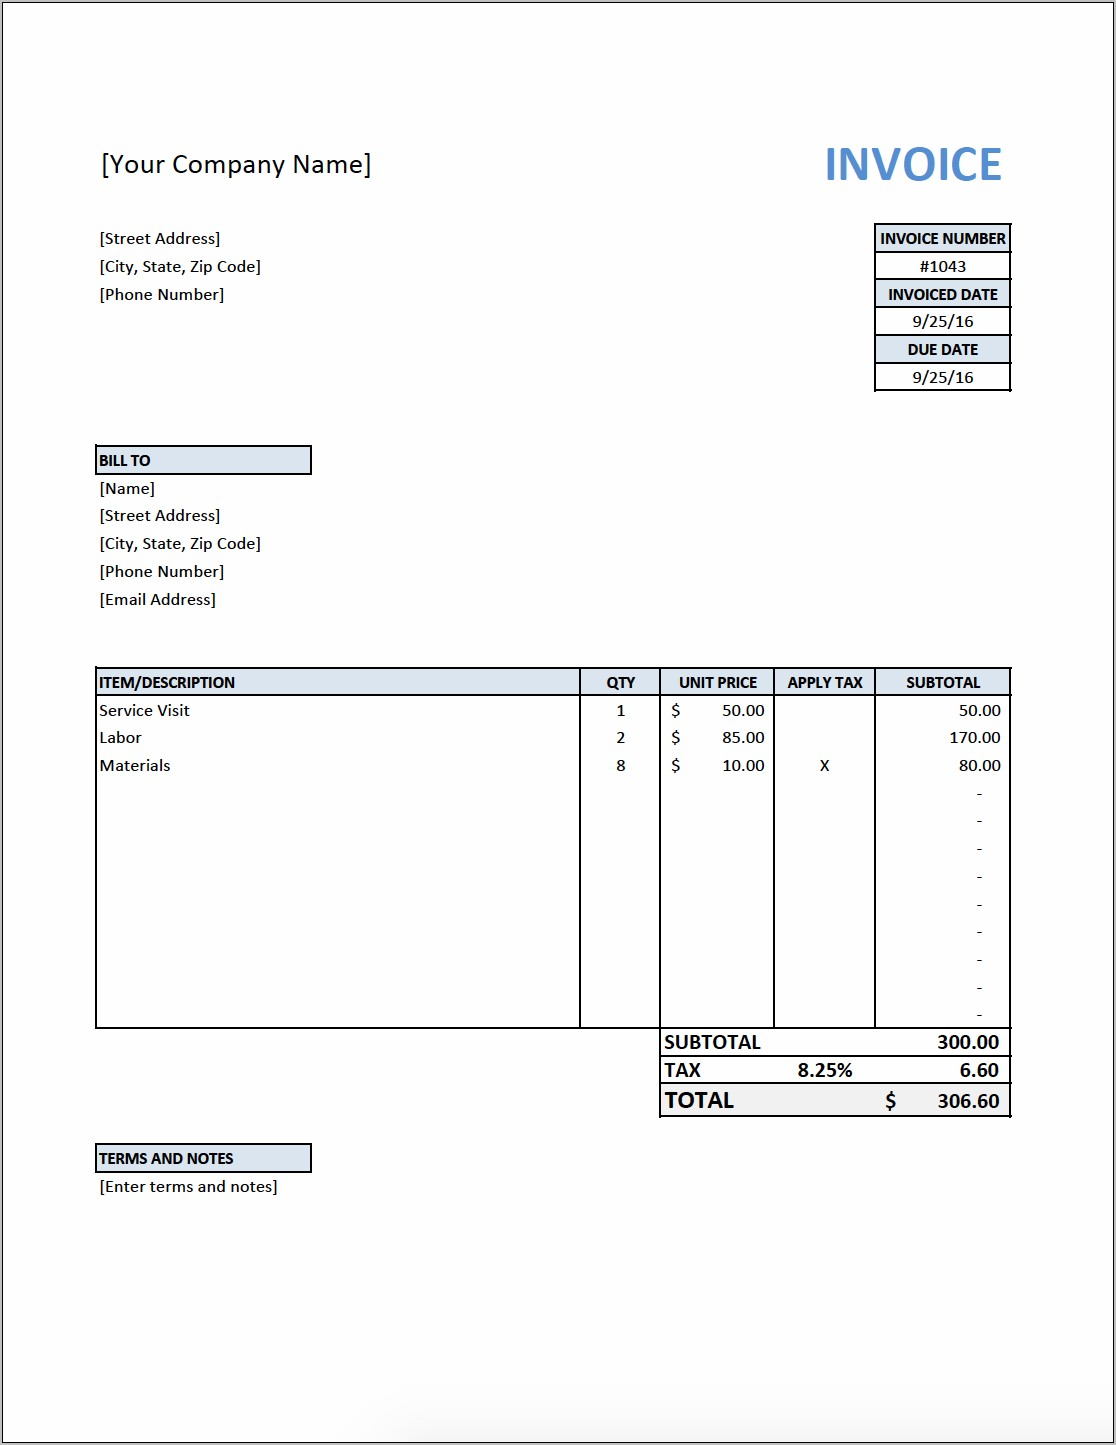 Quickbooks Use Estimate Template For Invoice